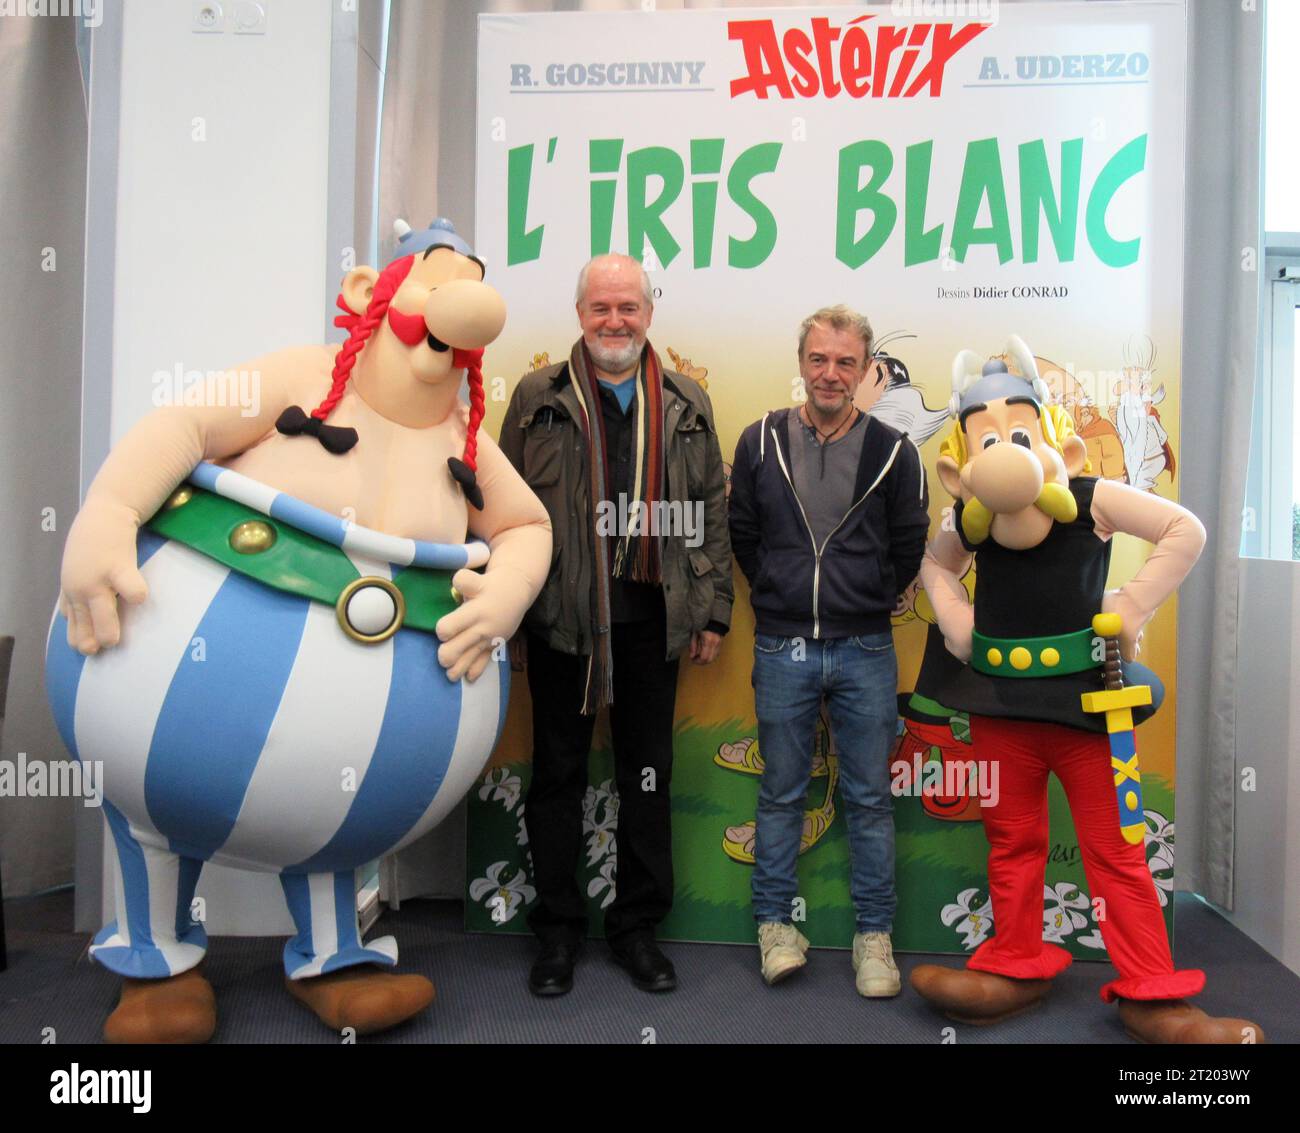 Asterix Vol. 40: Asterix and the White Iris (40)